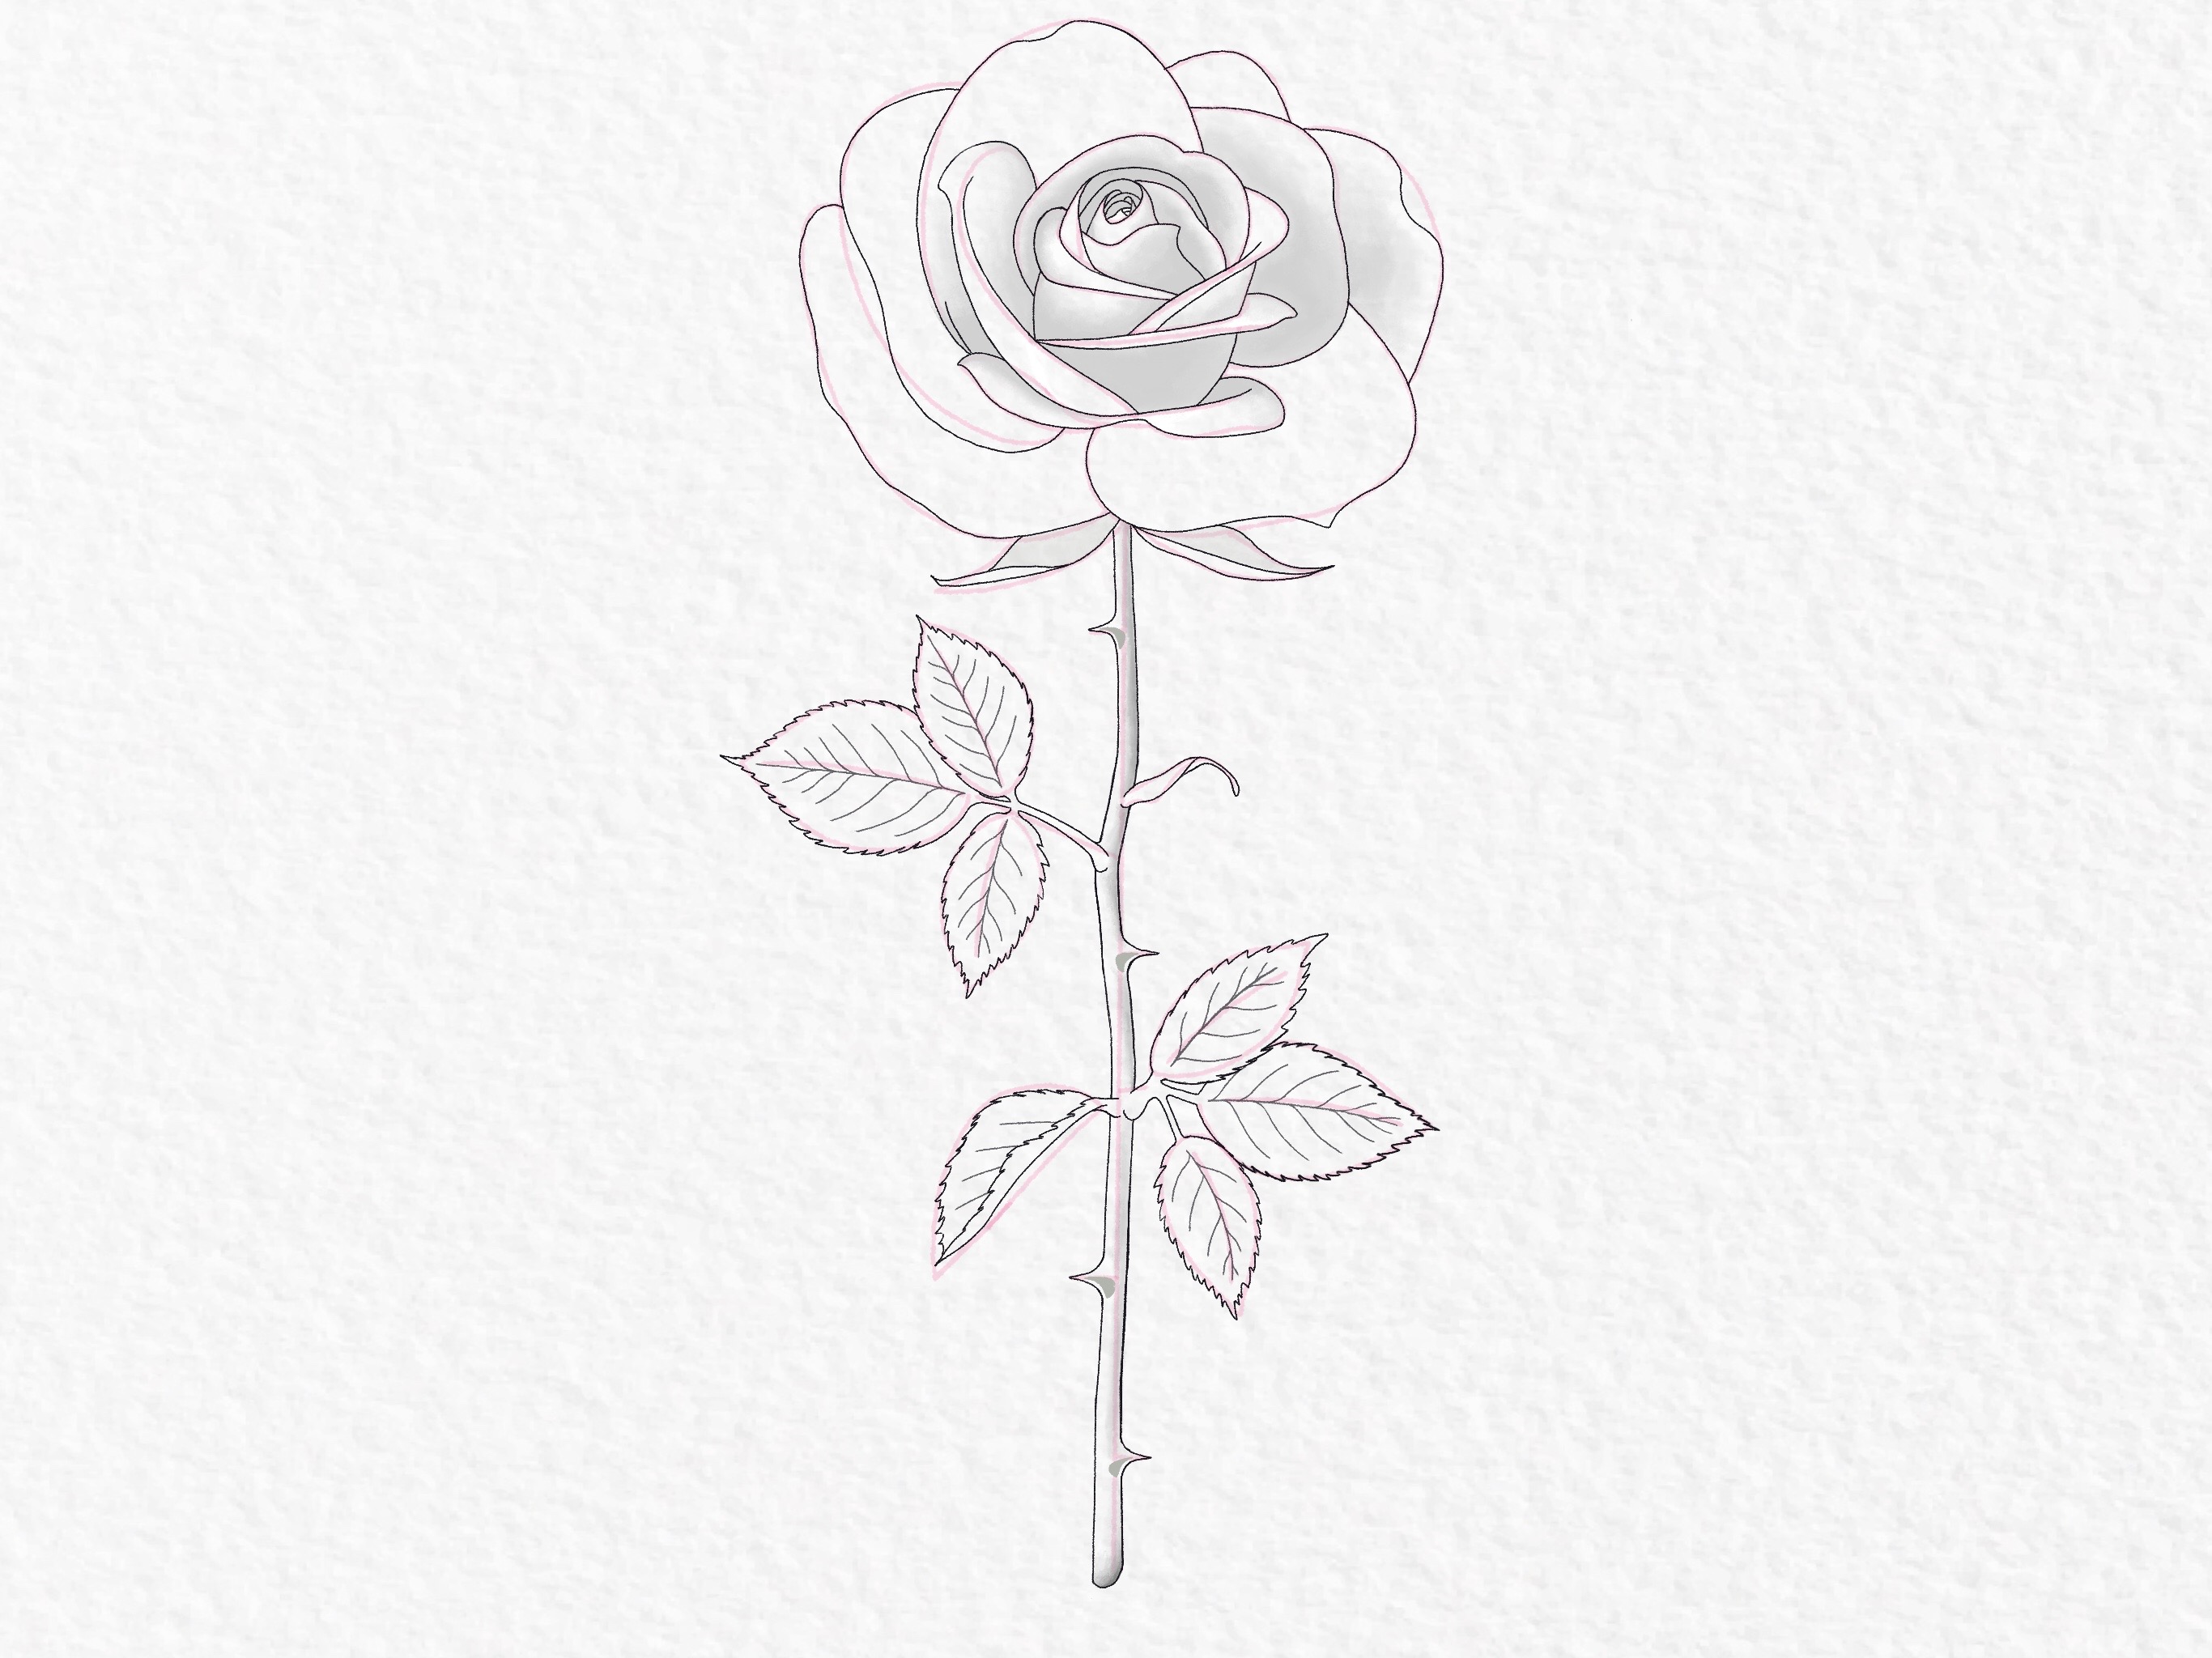 Rose line drawing - simple flower sketch. 20 Art Print by Siret Margaret |  Society6